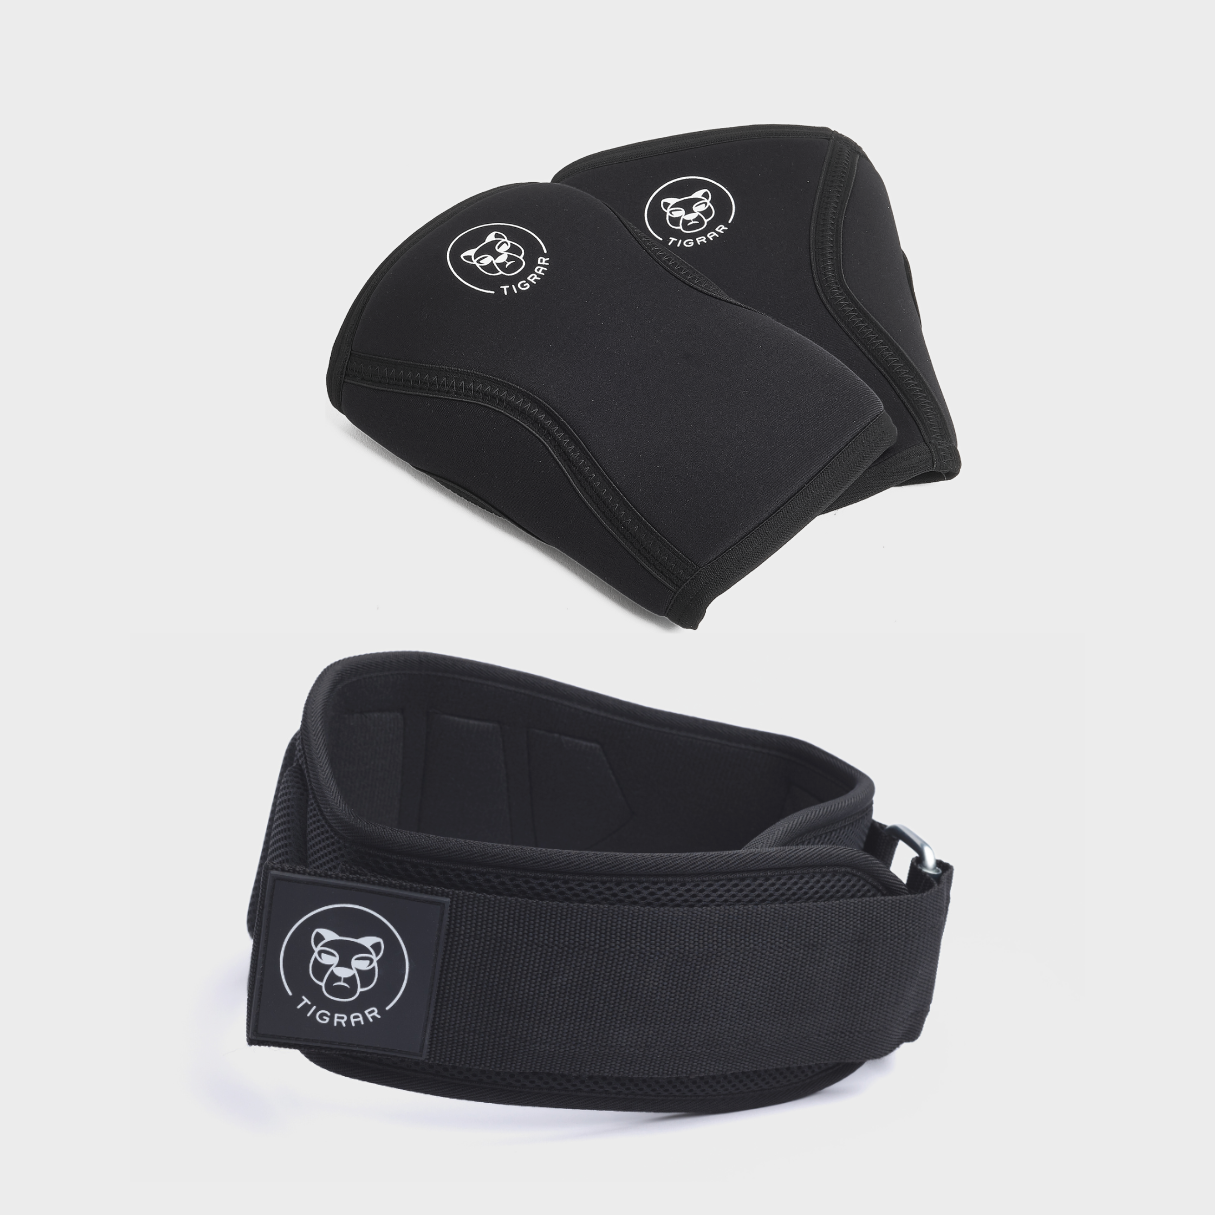 Complete fitness accessoire kit van Tigrar, inclusief stevige neopreen knee sleeves en lifting belt voor krachttraining.